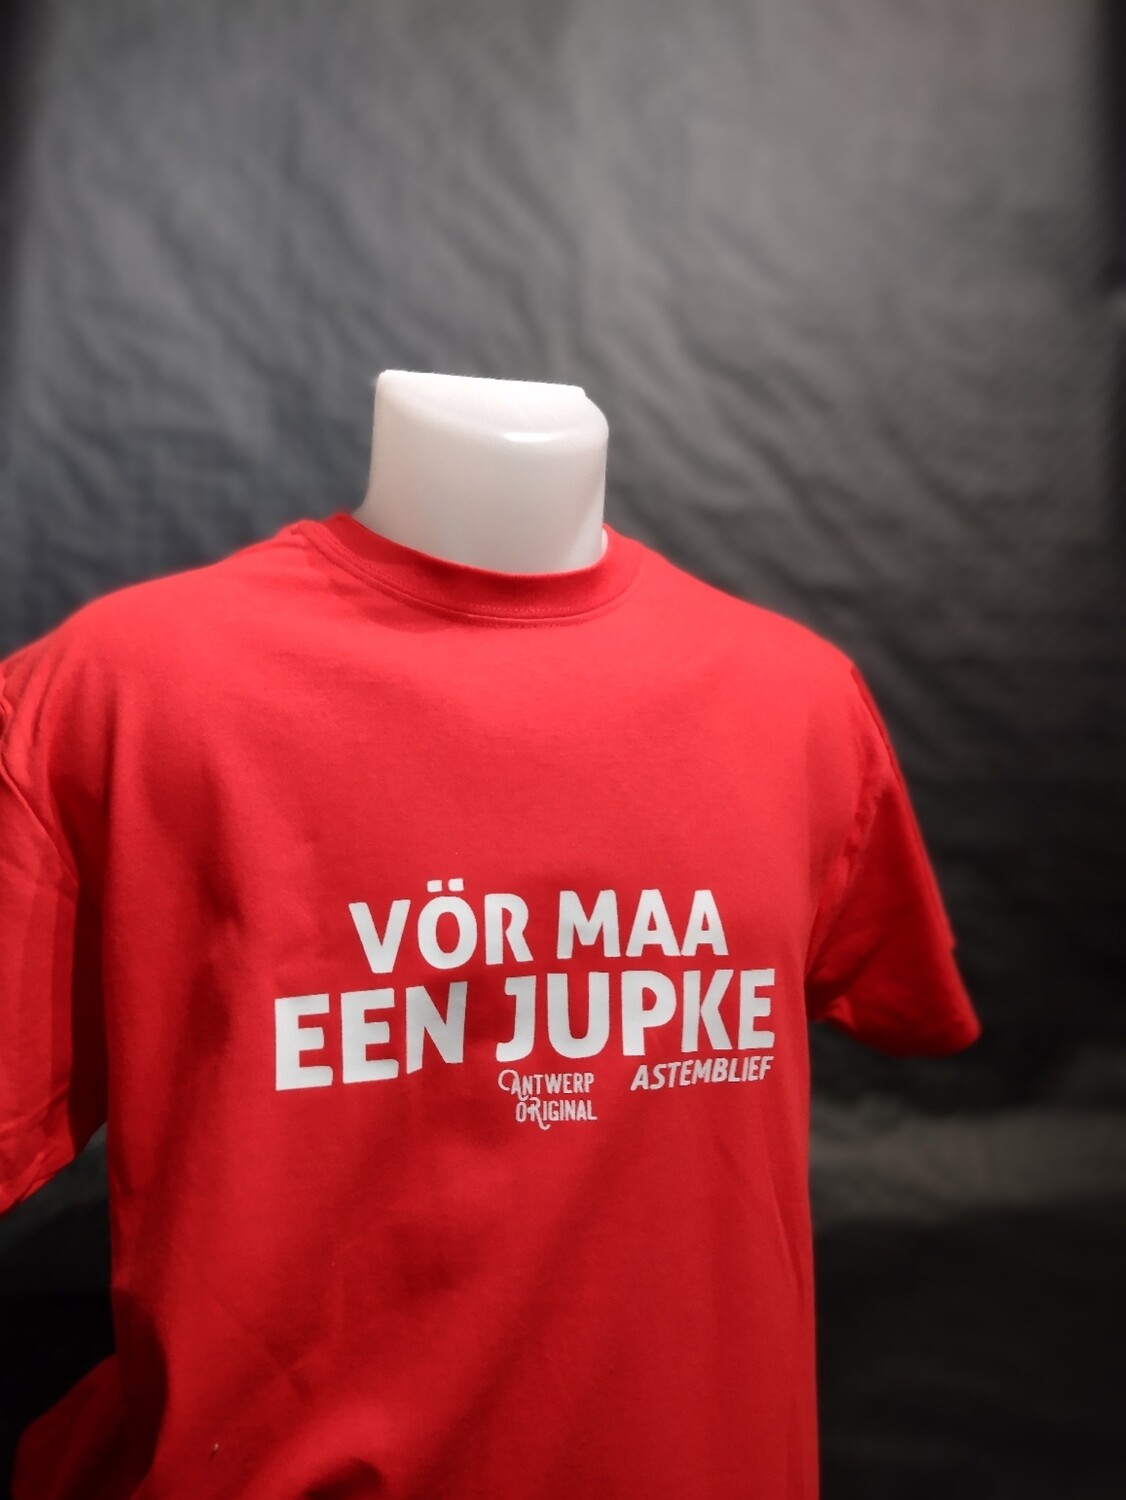 T shirt - VÖR MAA EEN JUPKE ASTEMBLIEF